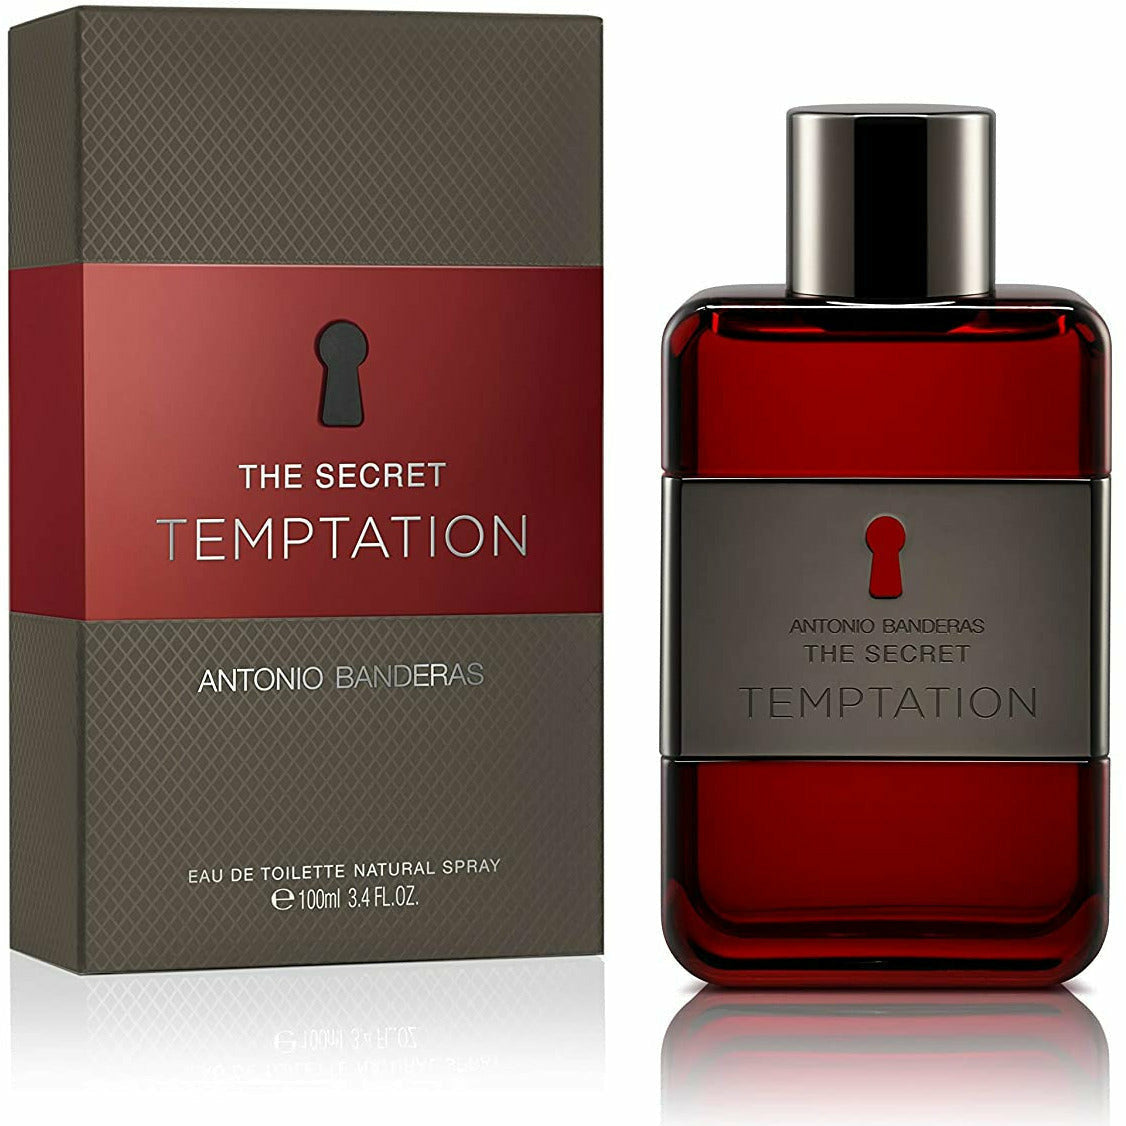 Antonio Banderas The Secret Temptation Eau de Toilette Spray - 100ml